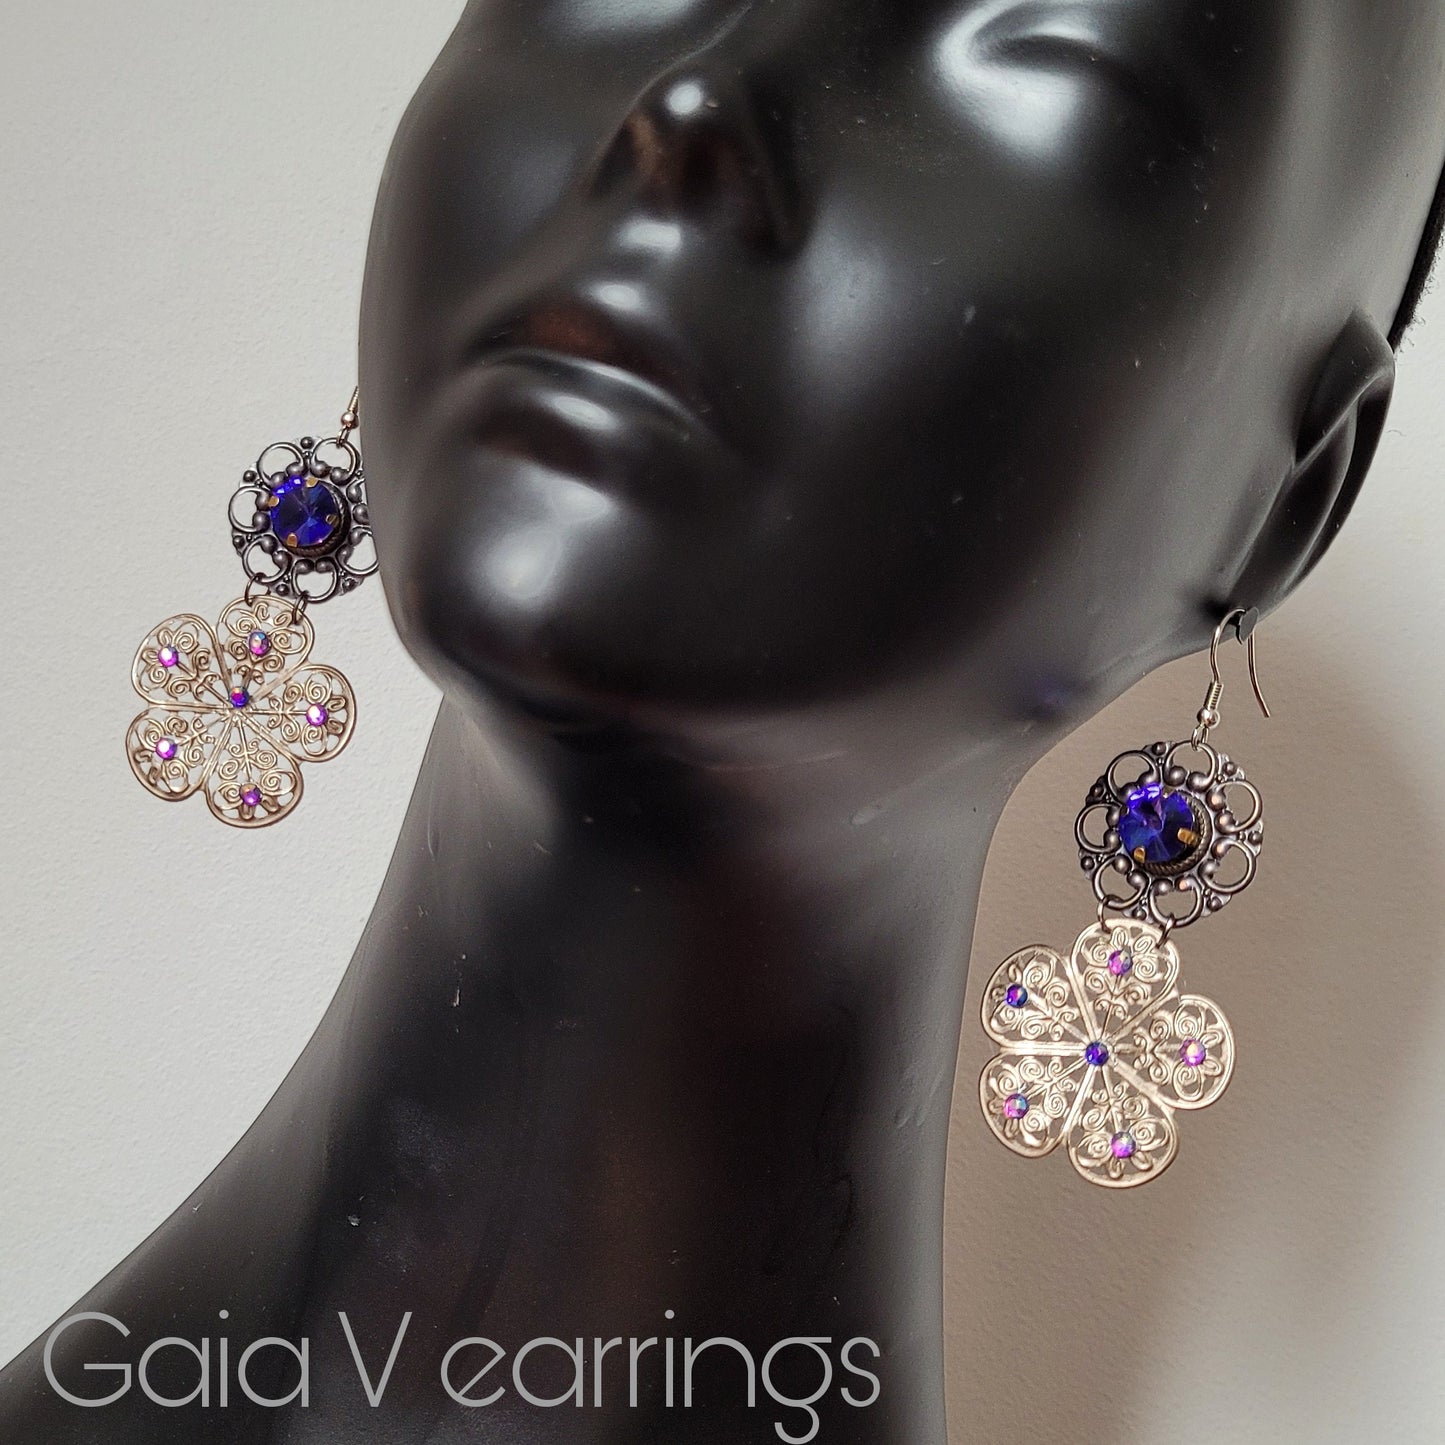 Deusa ex Machina collection: The Gaia earrings